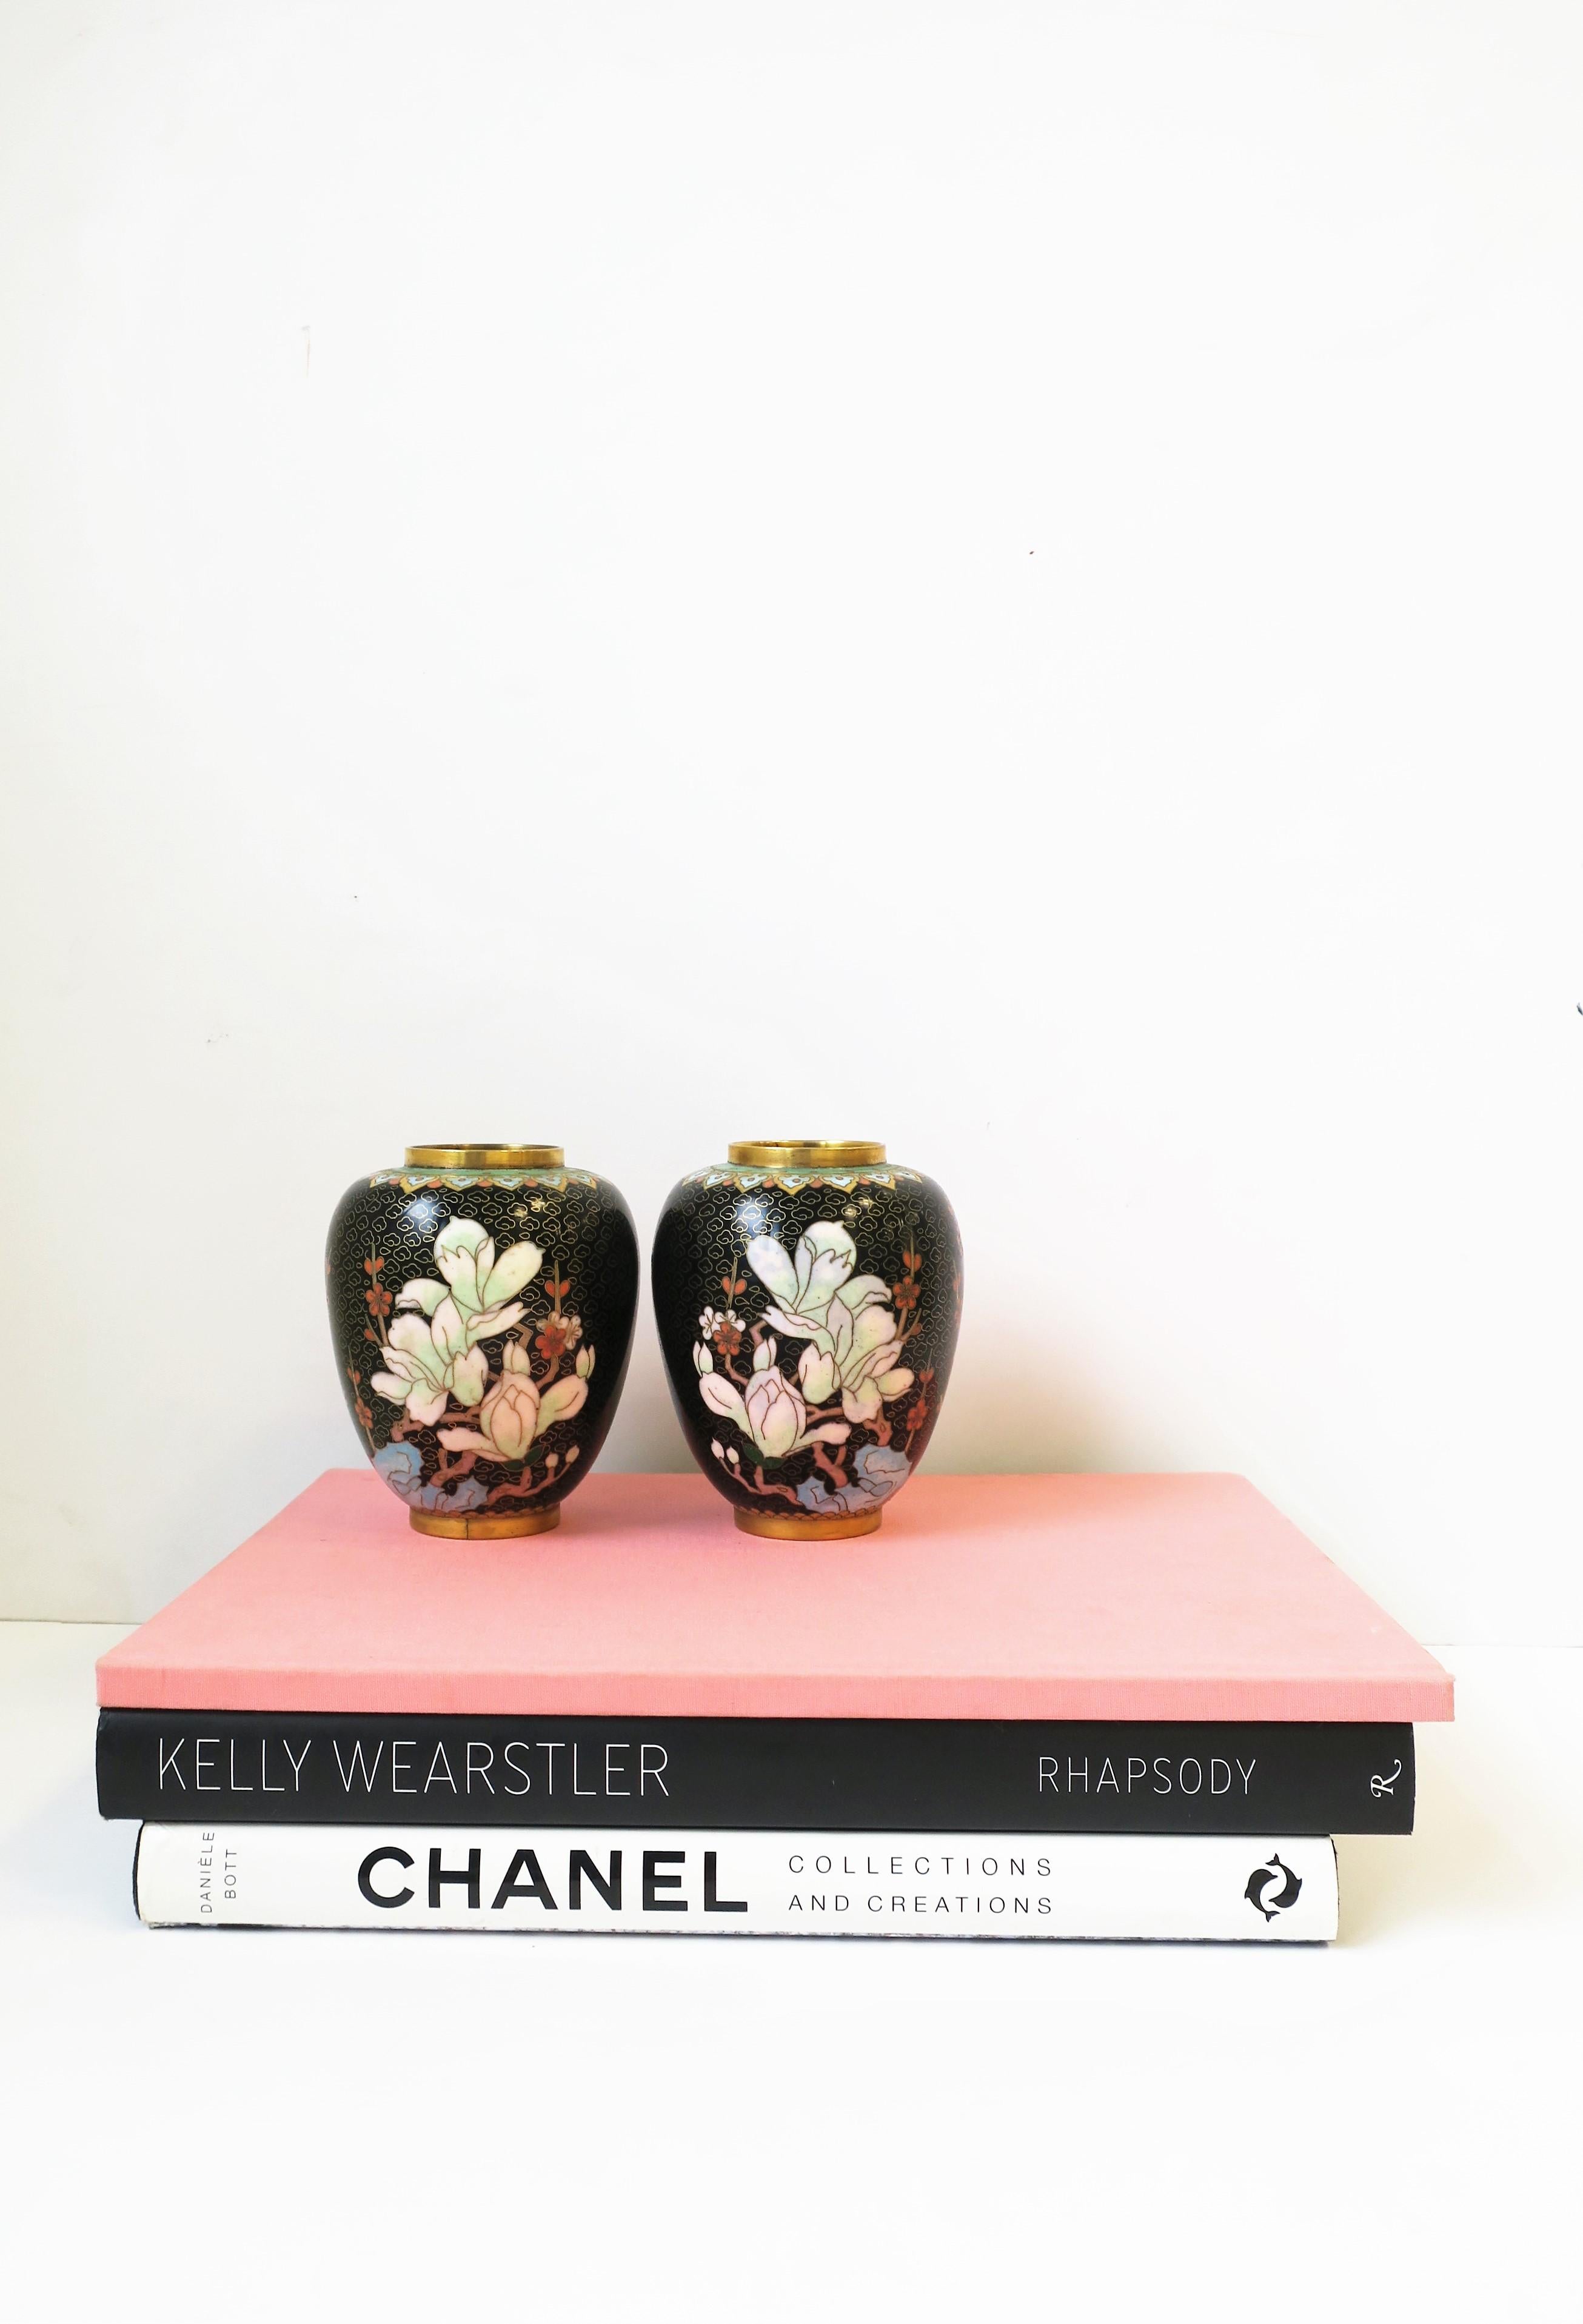 Cloisonné́ Enamel and Brass Flower Vases Black Gold and Pastel Colors, Pair For Sale 6